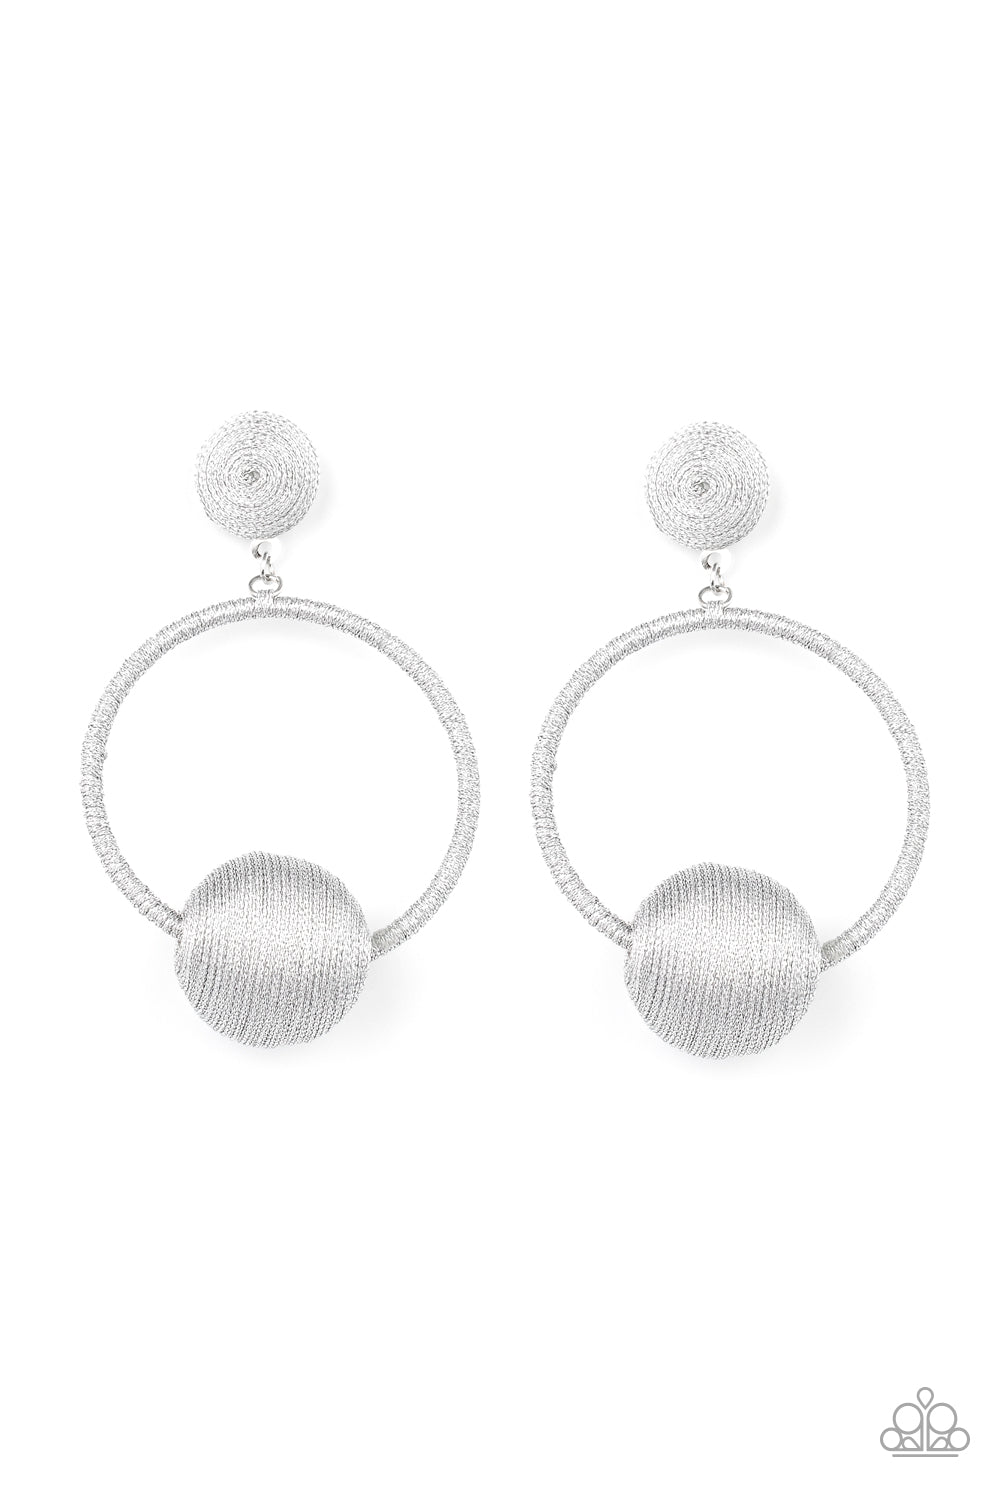 Social Sphere - Silver Earrings - Paparazzi Accessories 